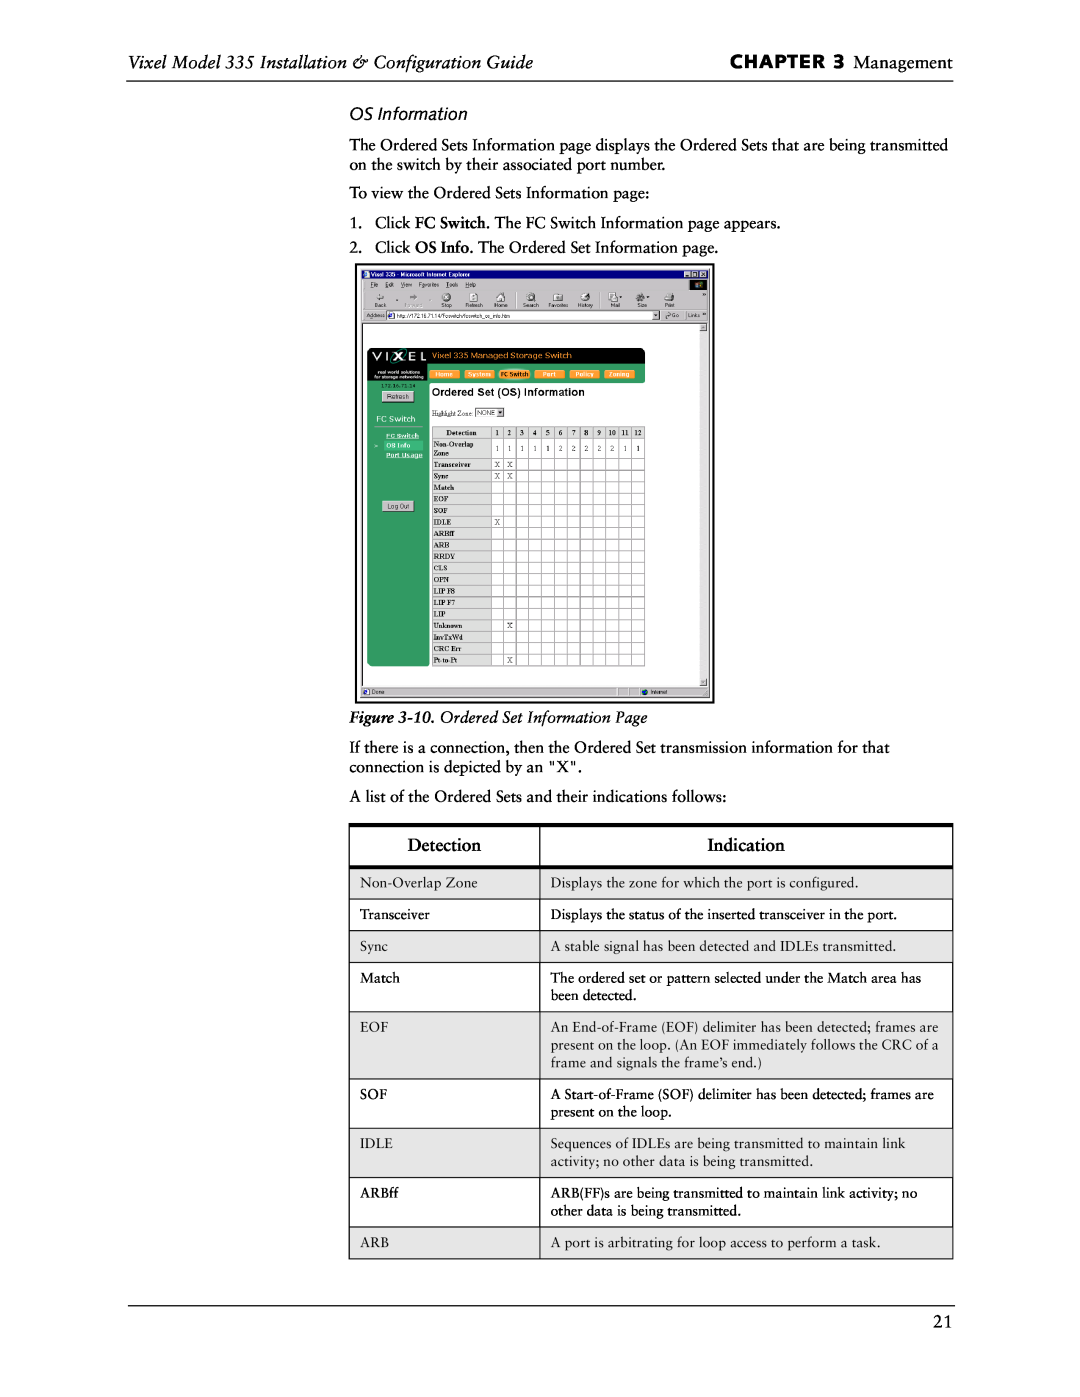 Vixel manual Management, Vixel Model 335 Installation & Configuration Guide, OS Information, Detection, Indication 